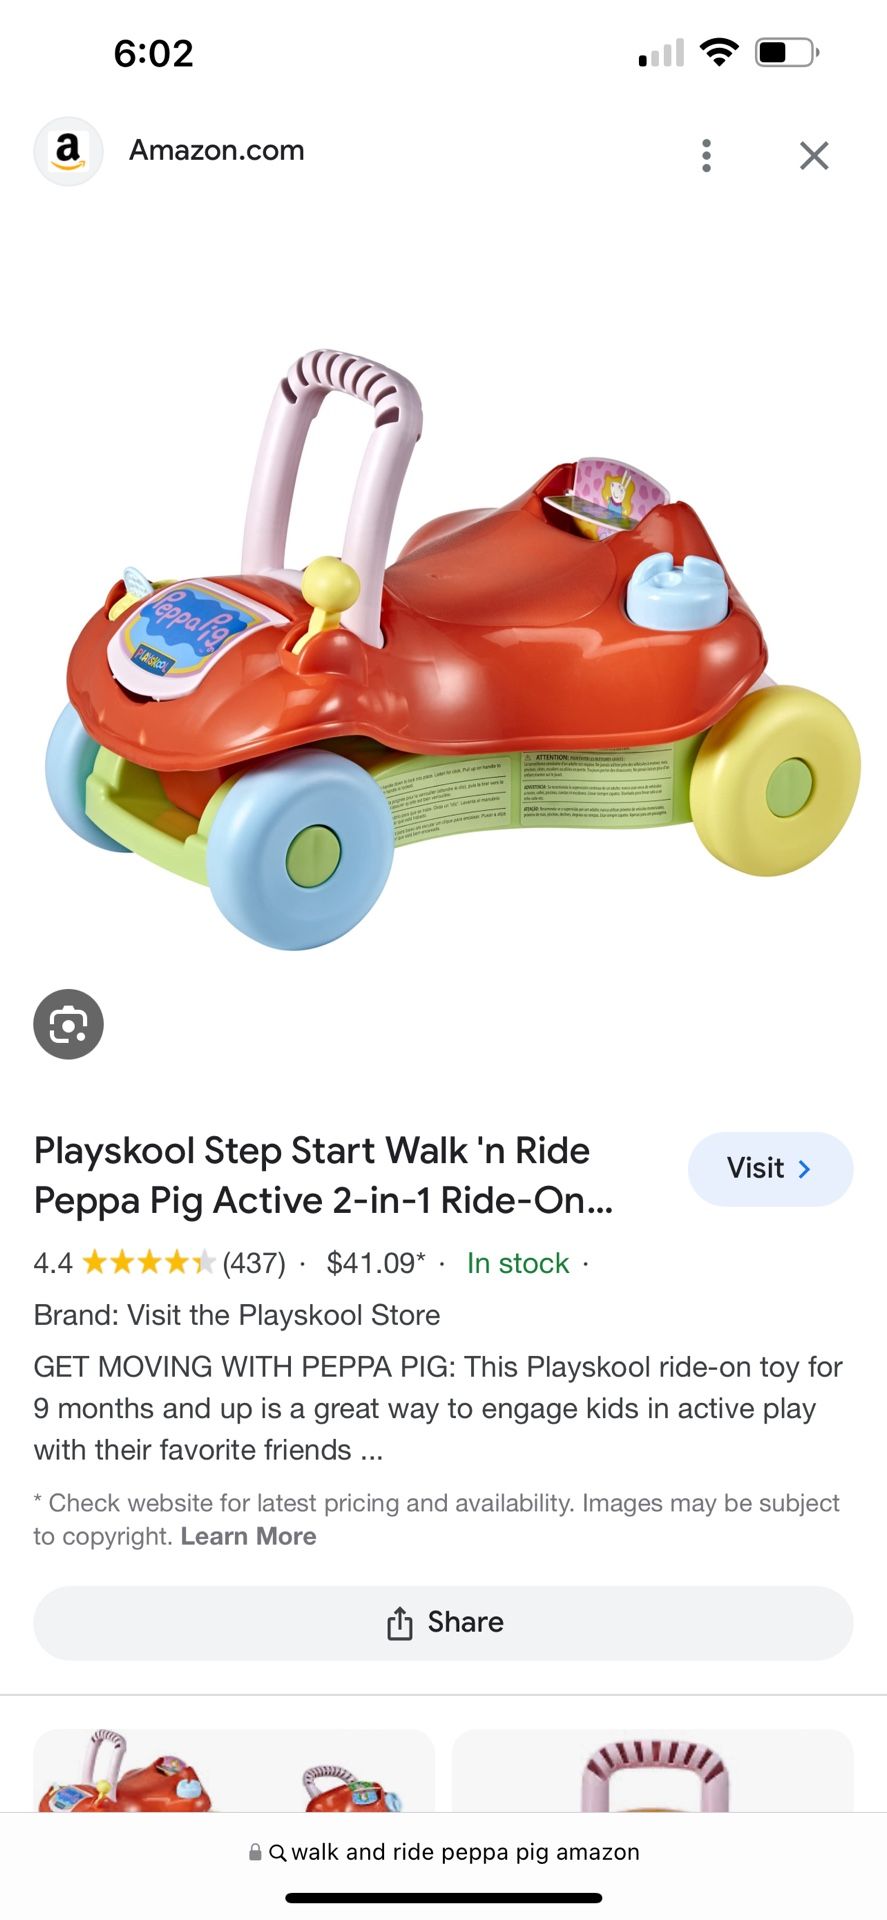 Playskool Peppa Pig Start Walk and Ride